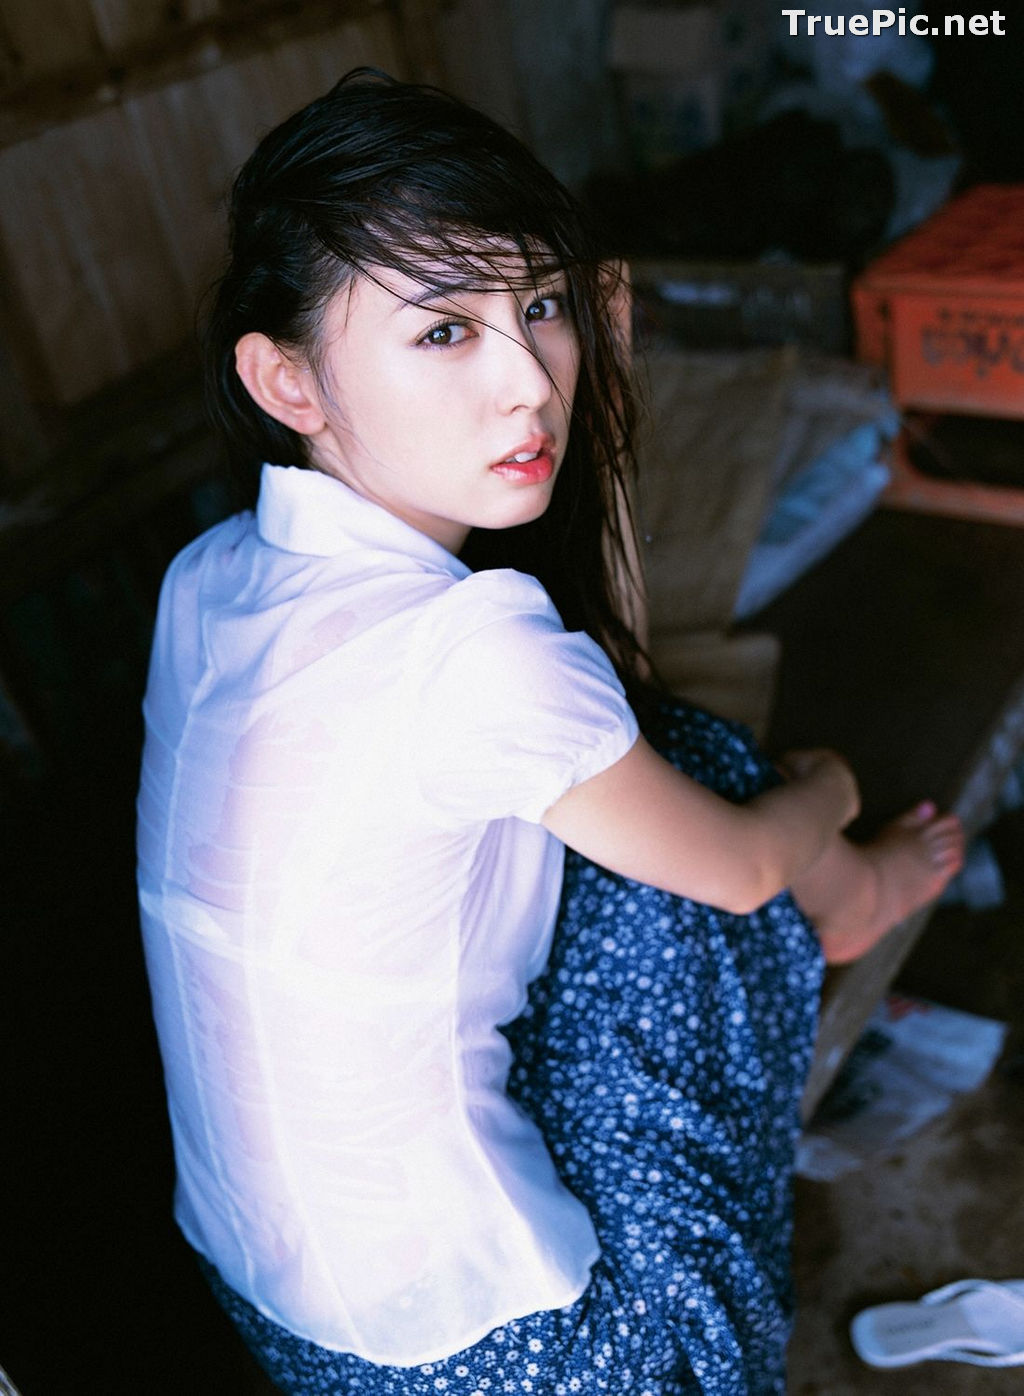 True Pic Ys Web Vol 234 Japanese Actress And Gravure Idol – Rina Akiyama